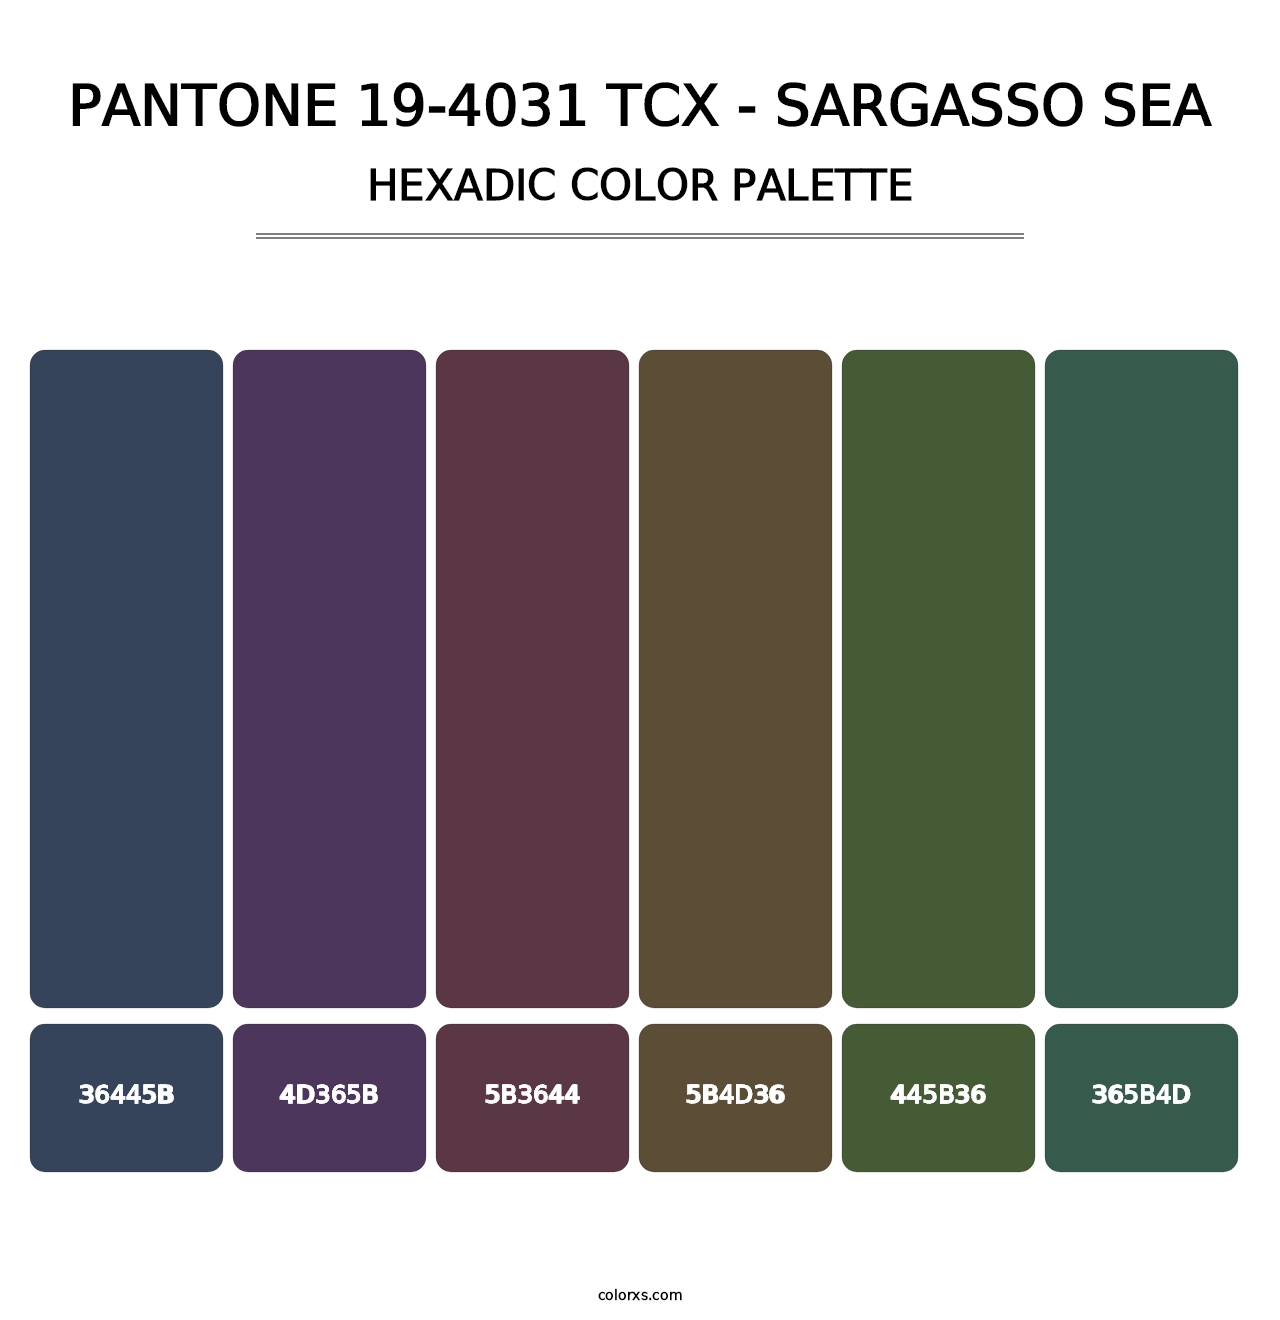 PANTONE 19-4031 TCX - Sargasso Sea - Hexadic Color Palette